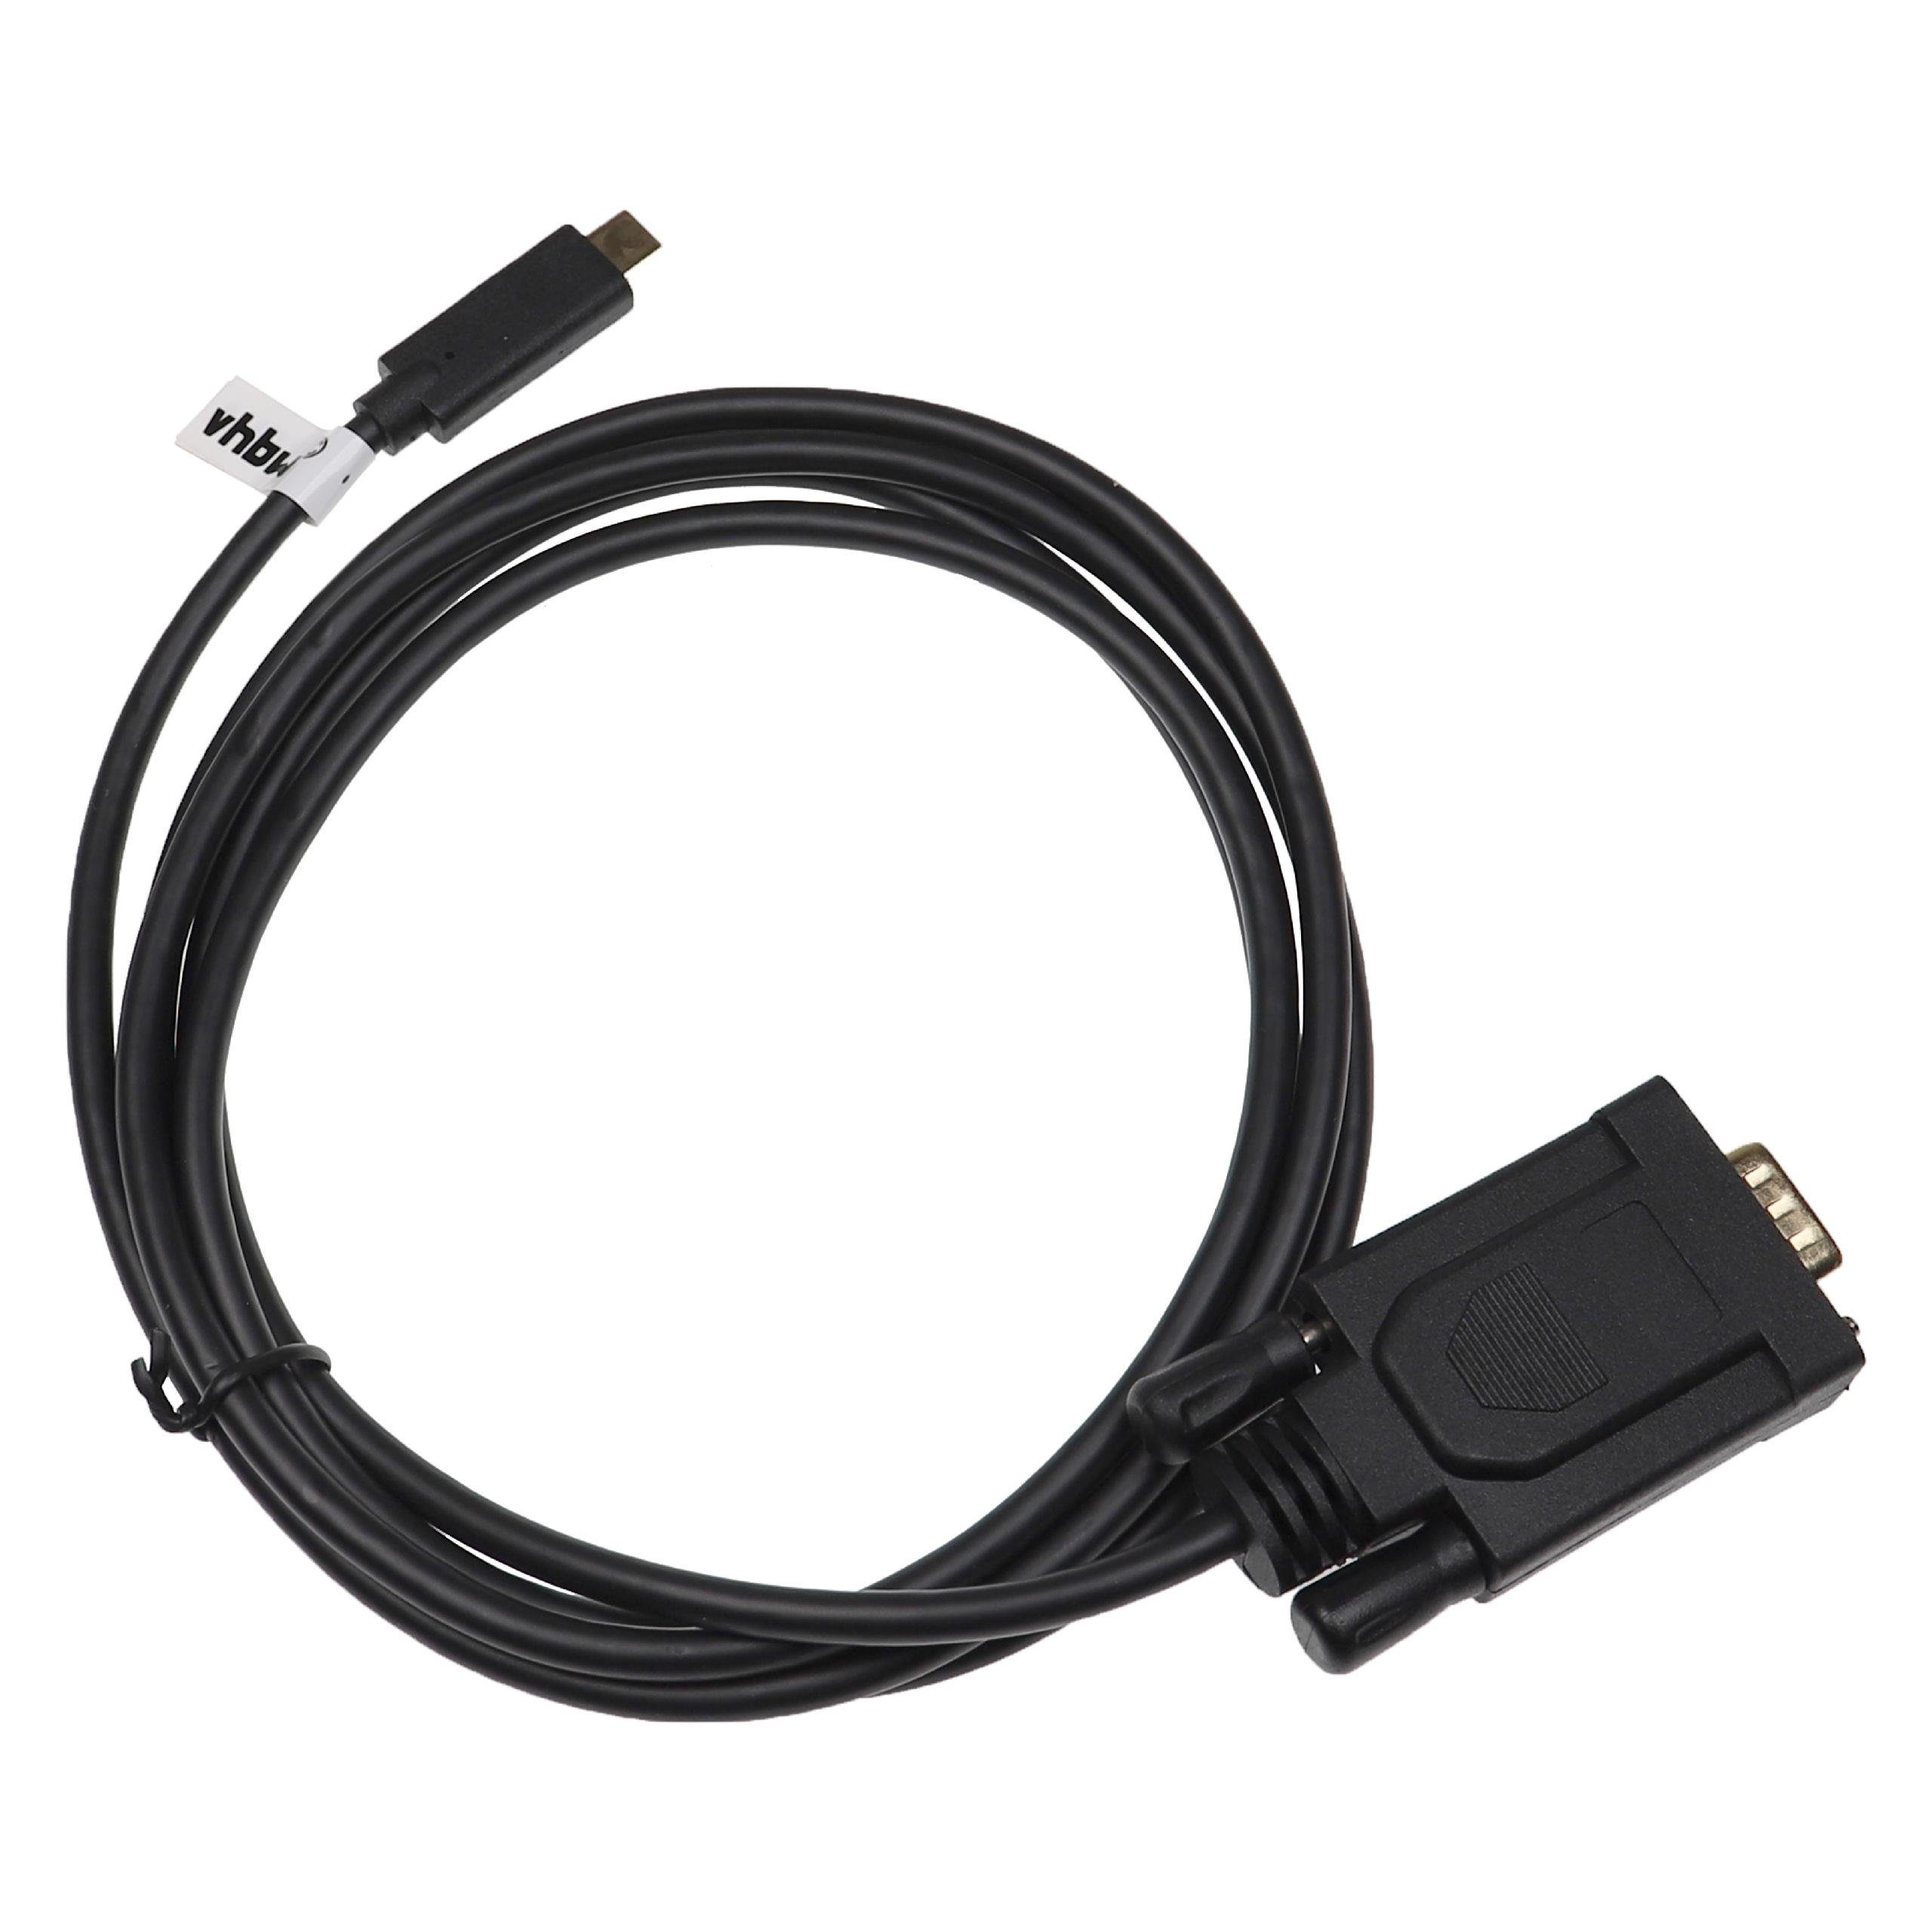 vhbw für Computer / Monitor / TV, Video Audio & Konsole USB-Adapter